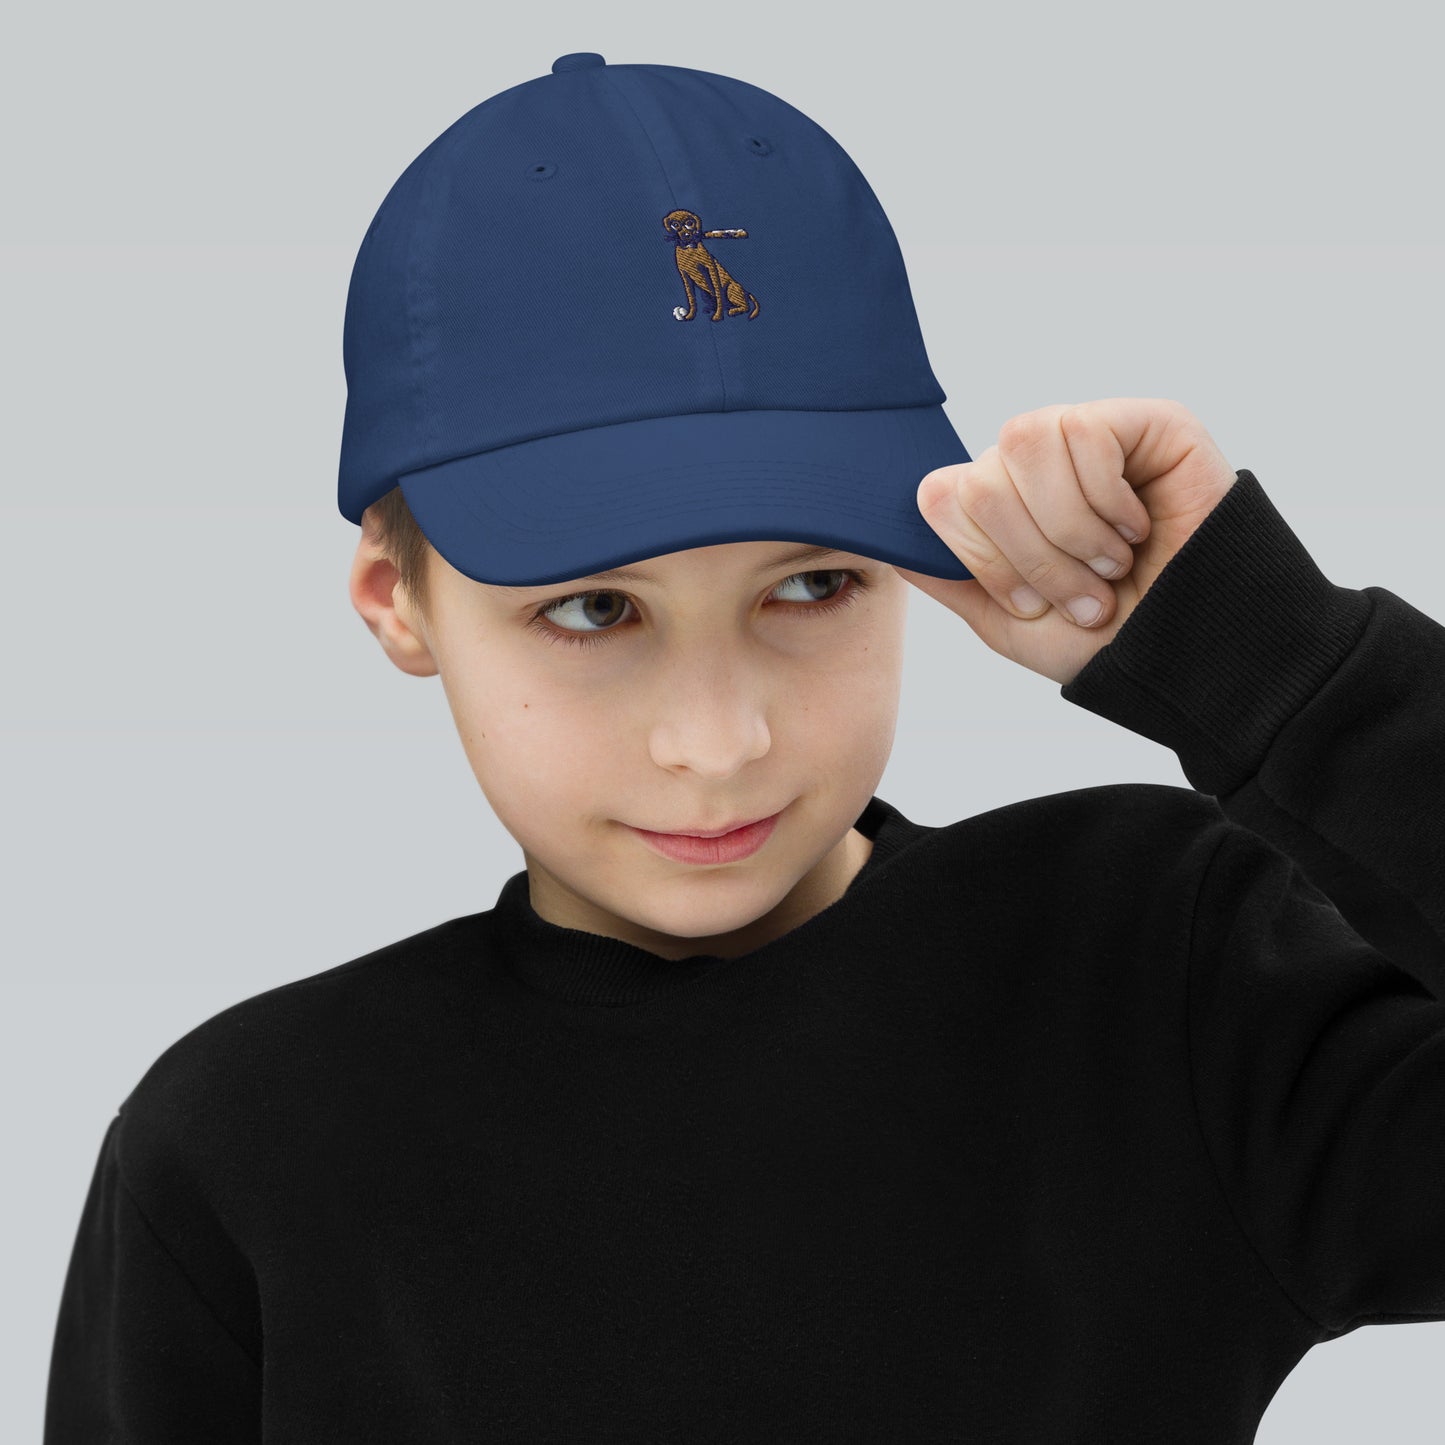 Baseball youth sports cap